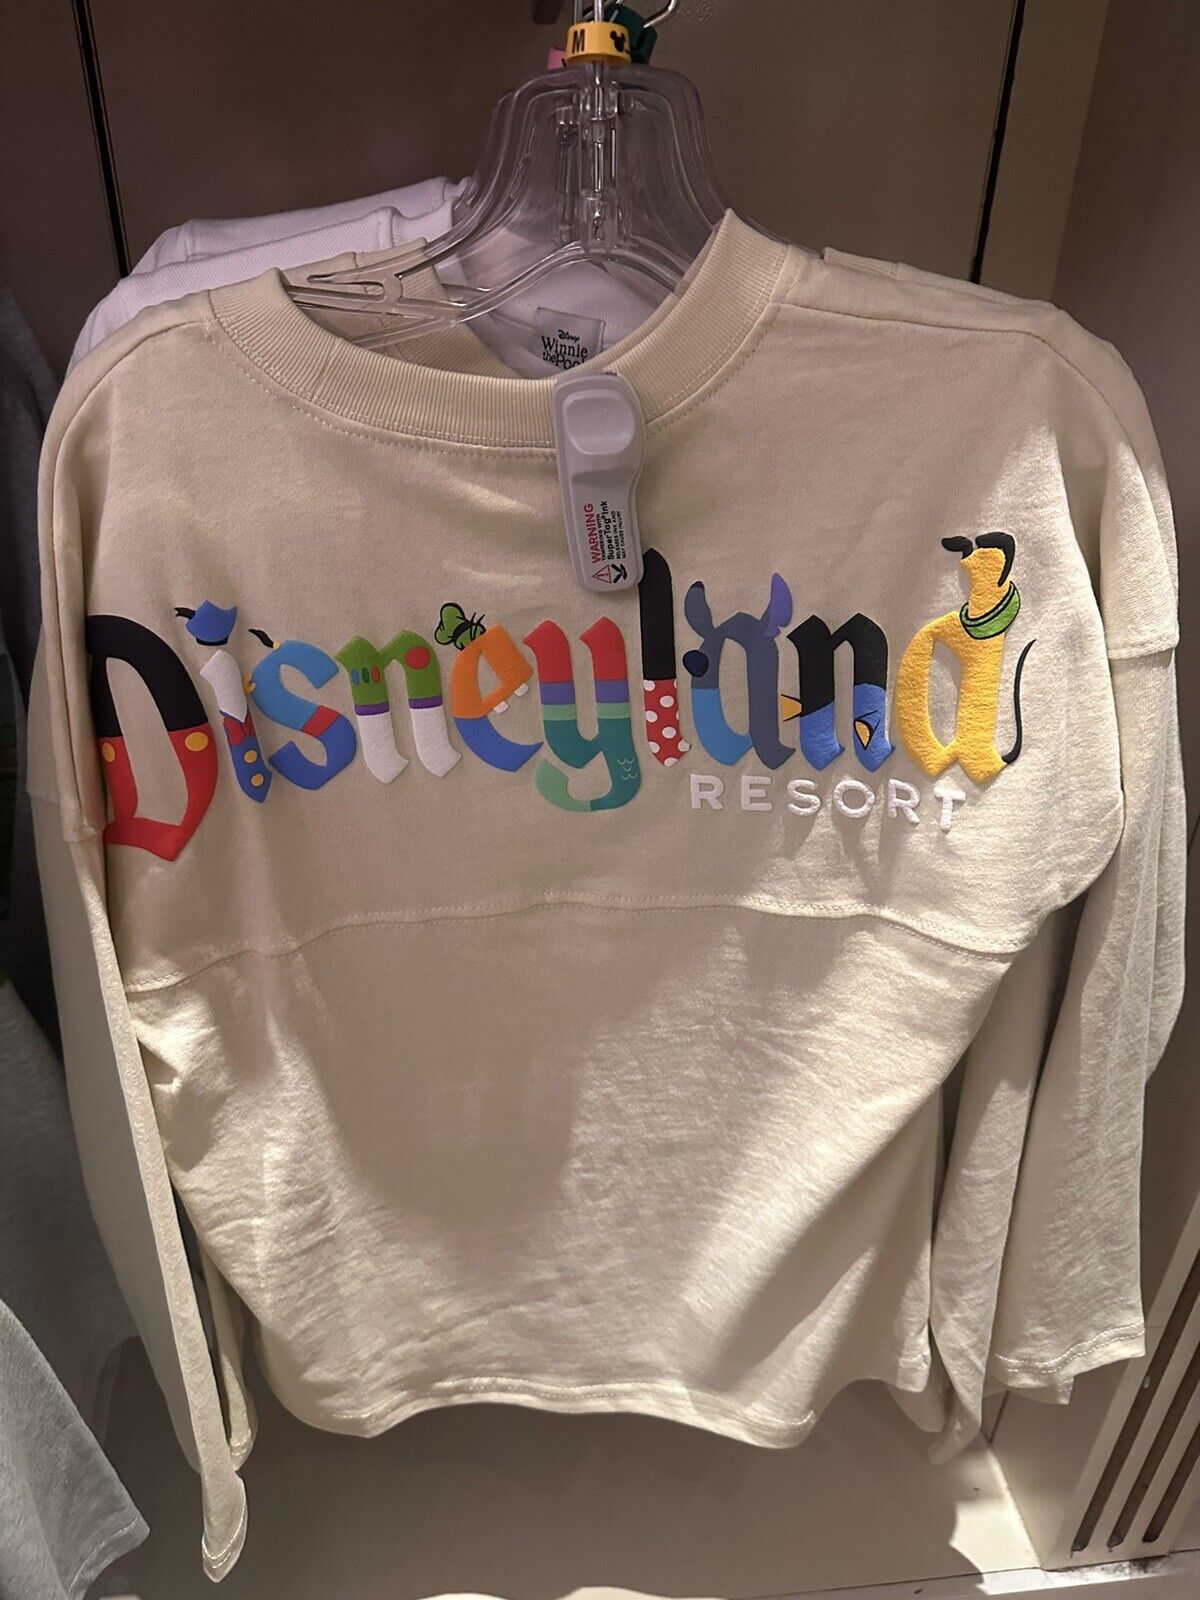 Disneyland character letters spirit jersey Kids Size Large (11/12)